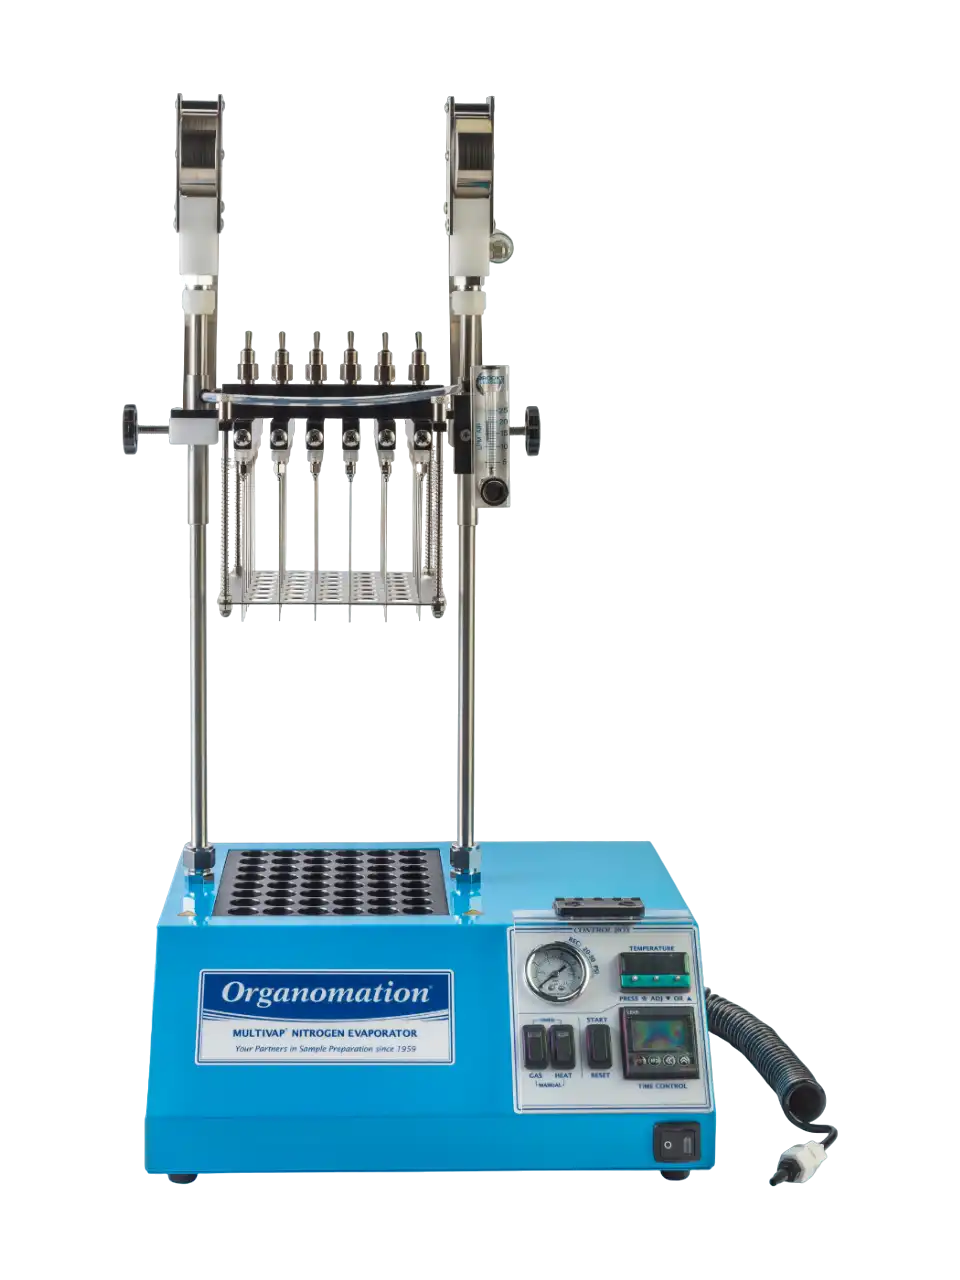 Nitrogen Evaporator, MULTIVAP Series, Standard, with Dry Block Heater (30-120°C and 900 W), Digital Control, 48 Sample Positions